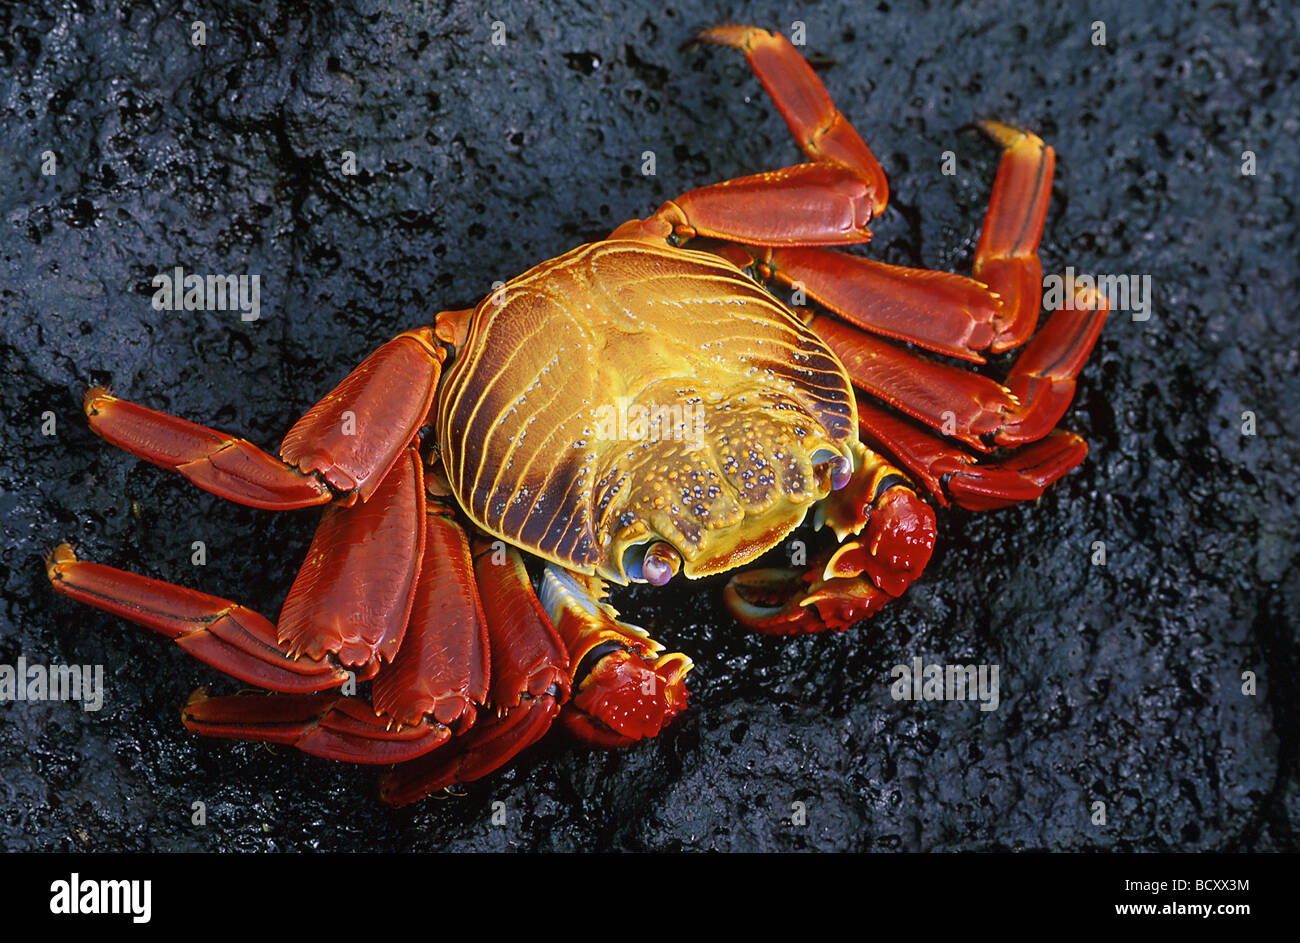 grapsus grapsus / mottled shore crab Stock Photo